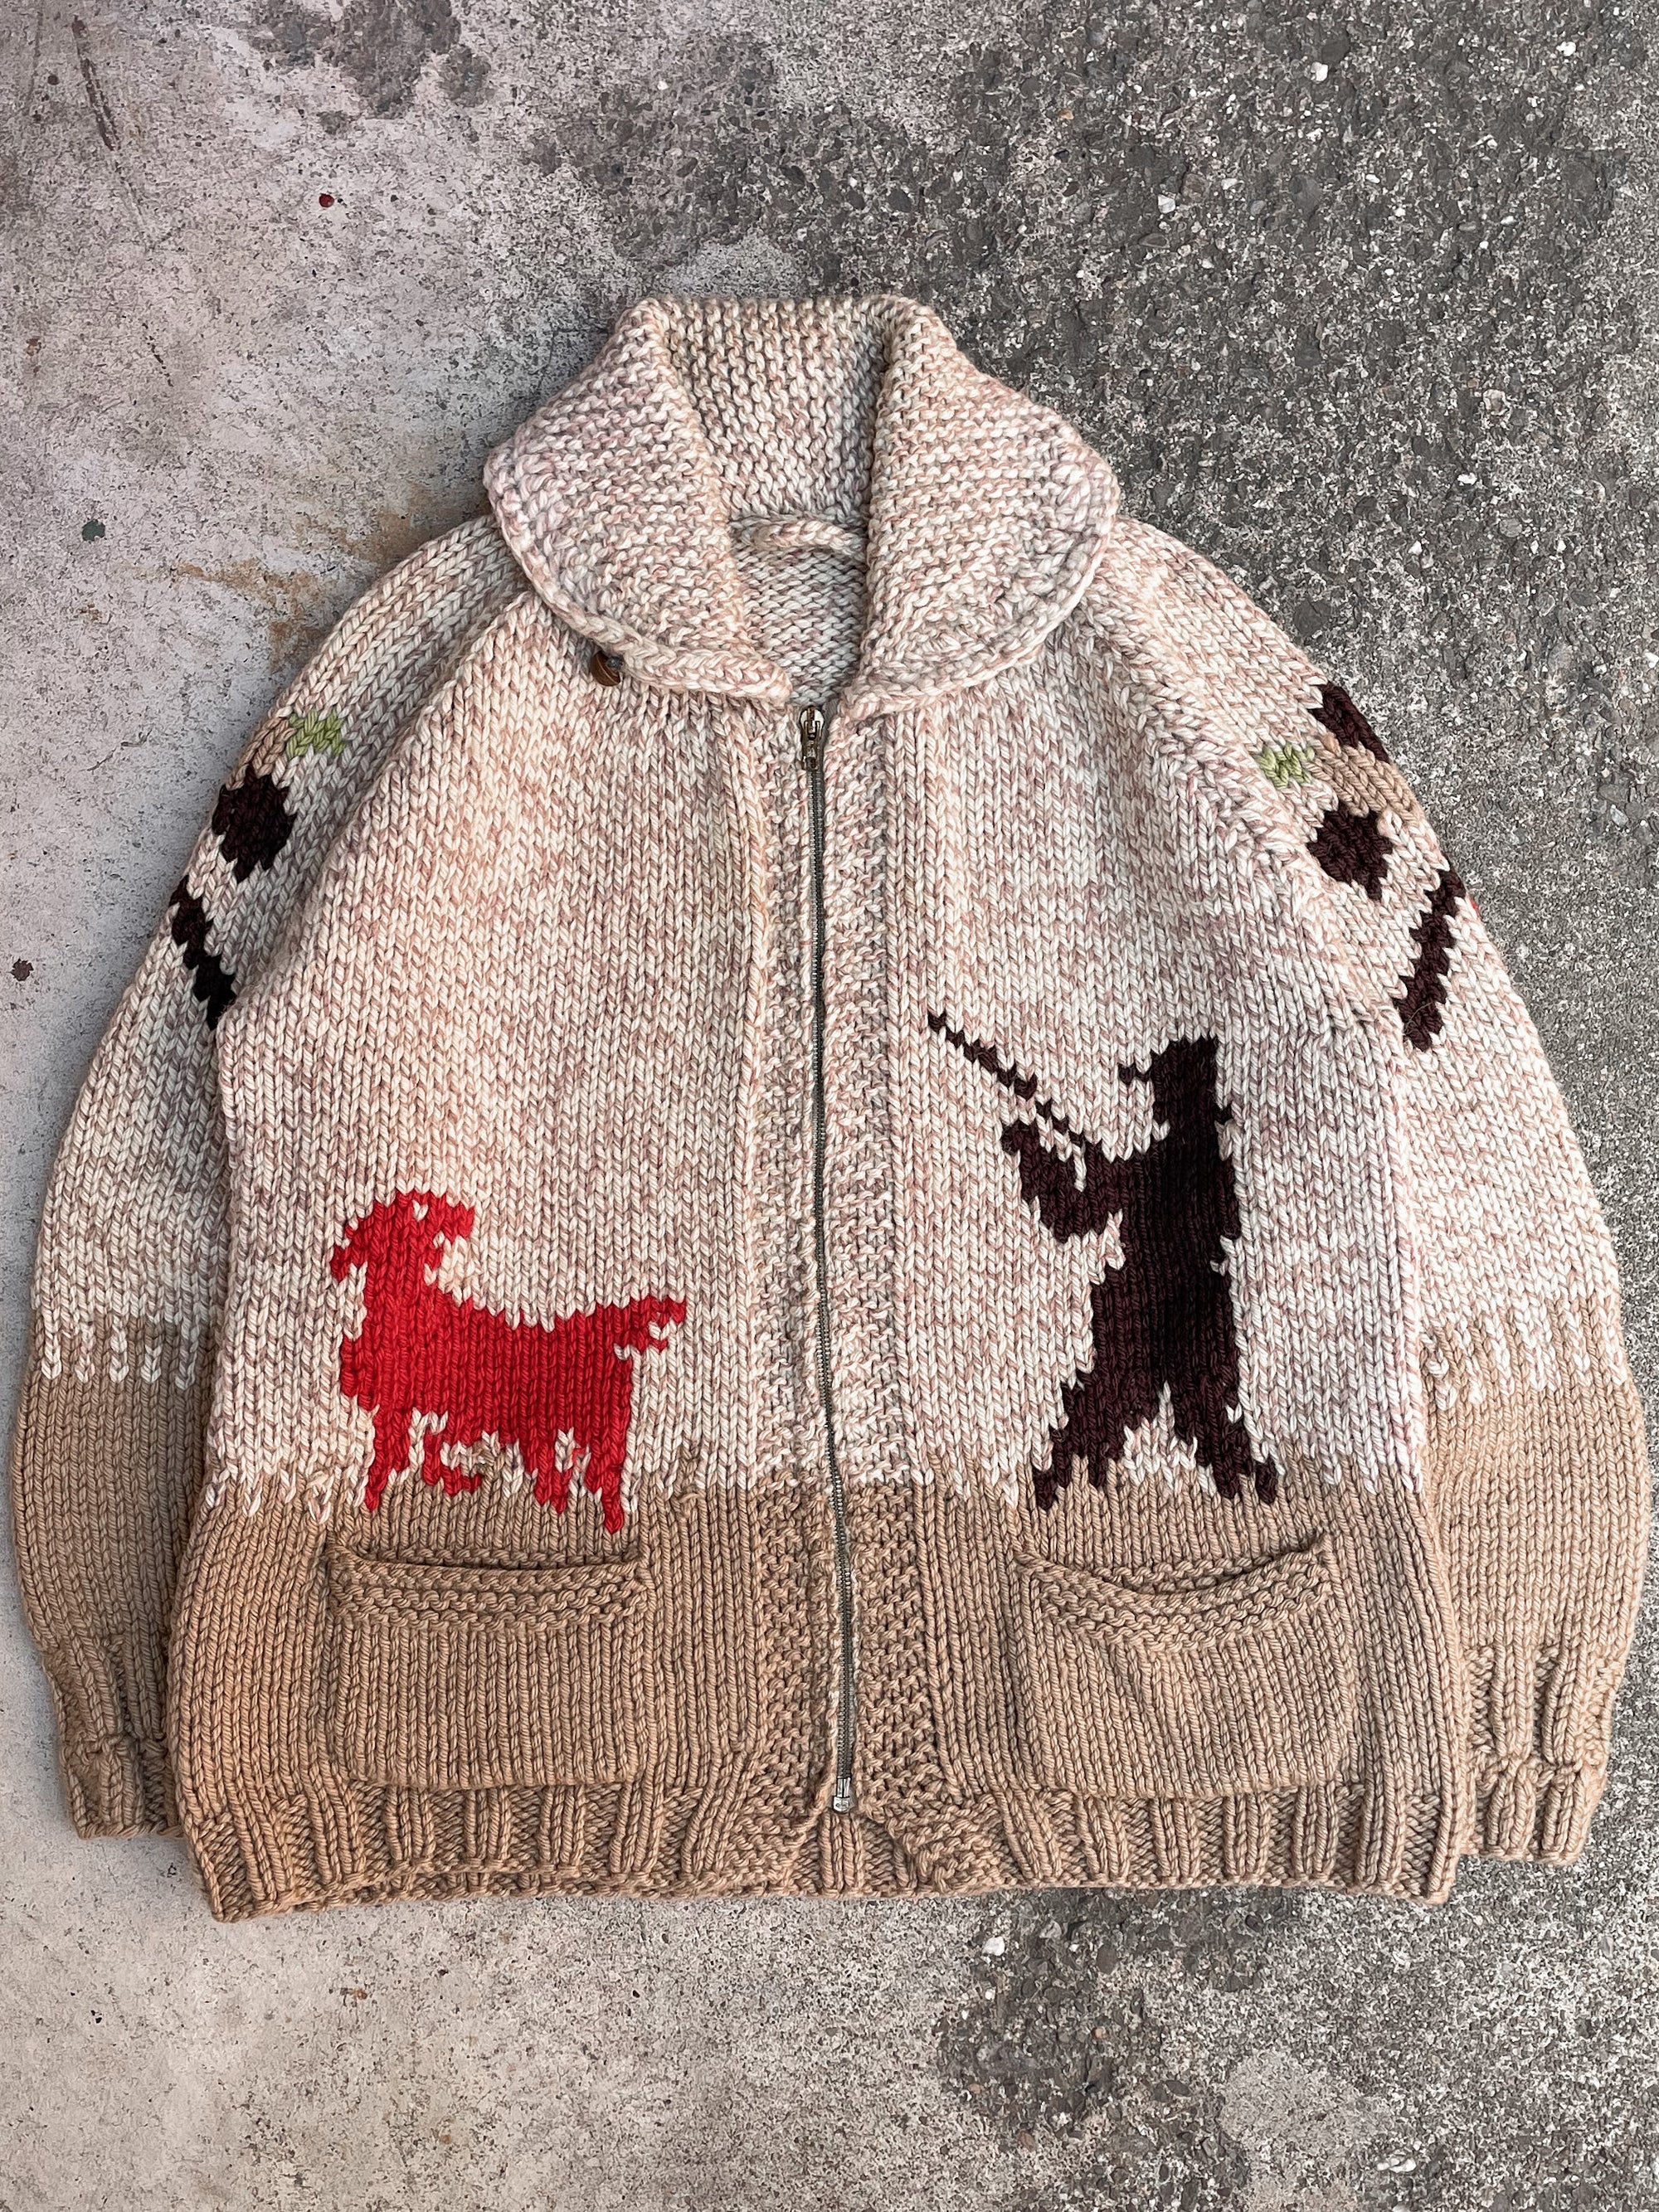 1950s/60s “Pheasant Hunt” Knit Cowichan Sweater (M)